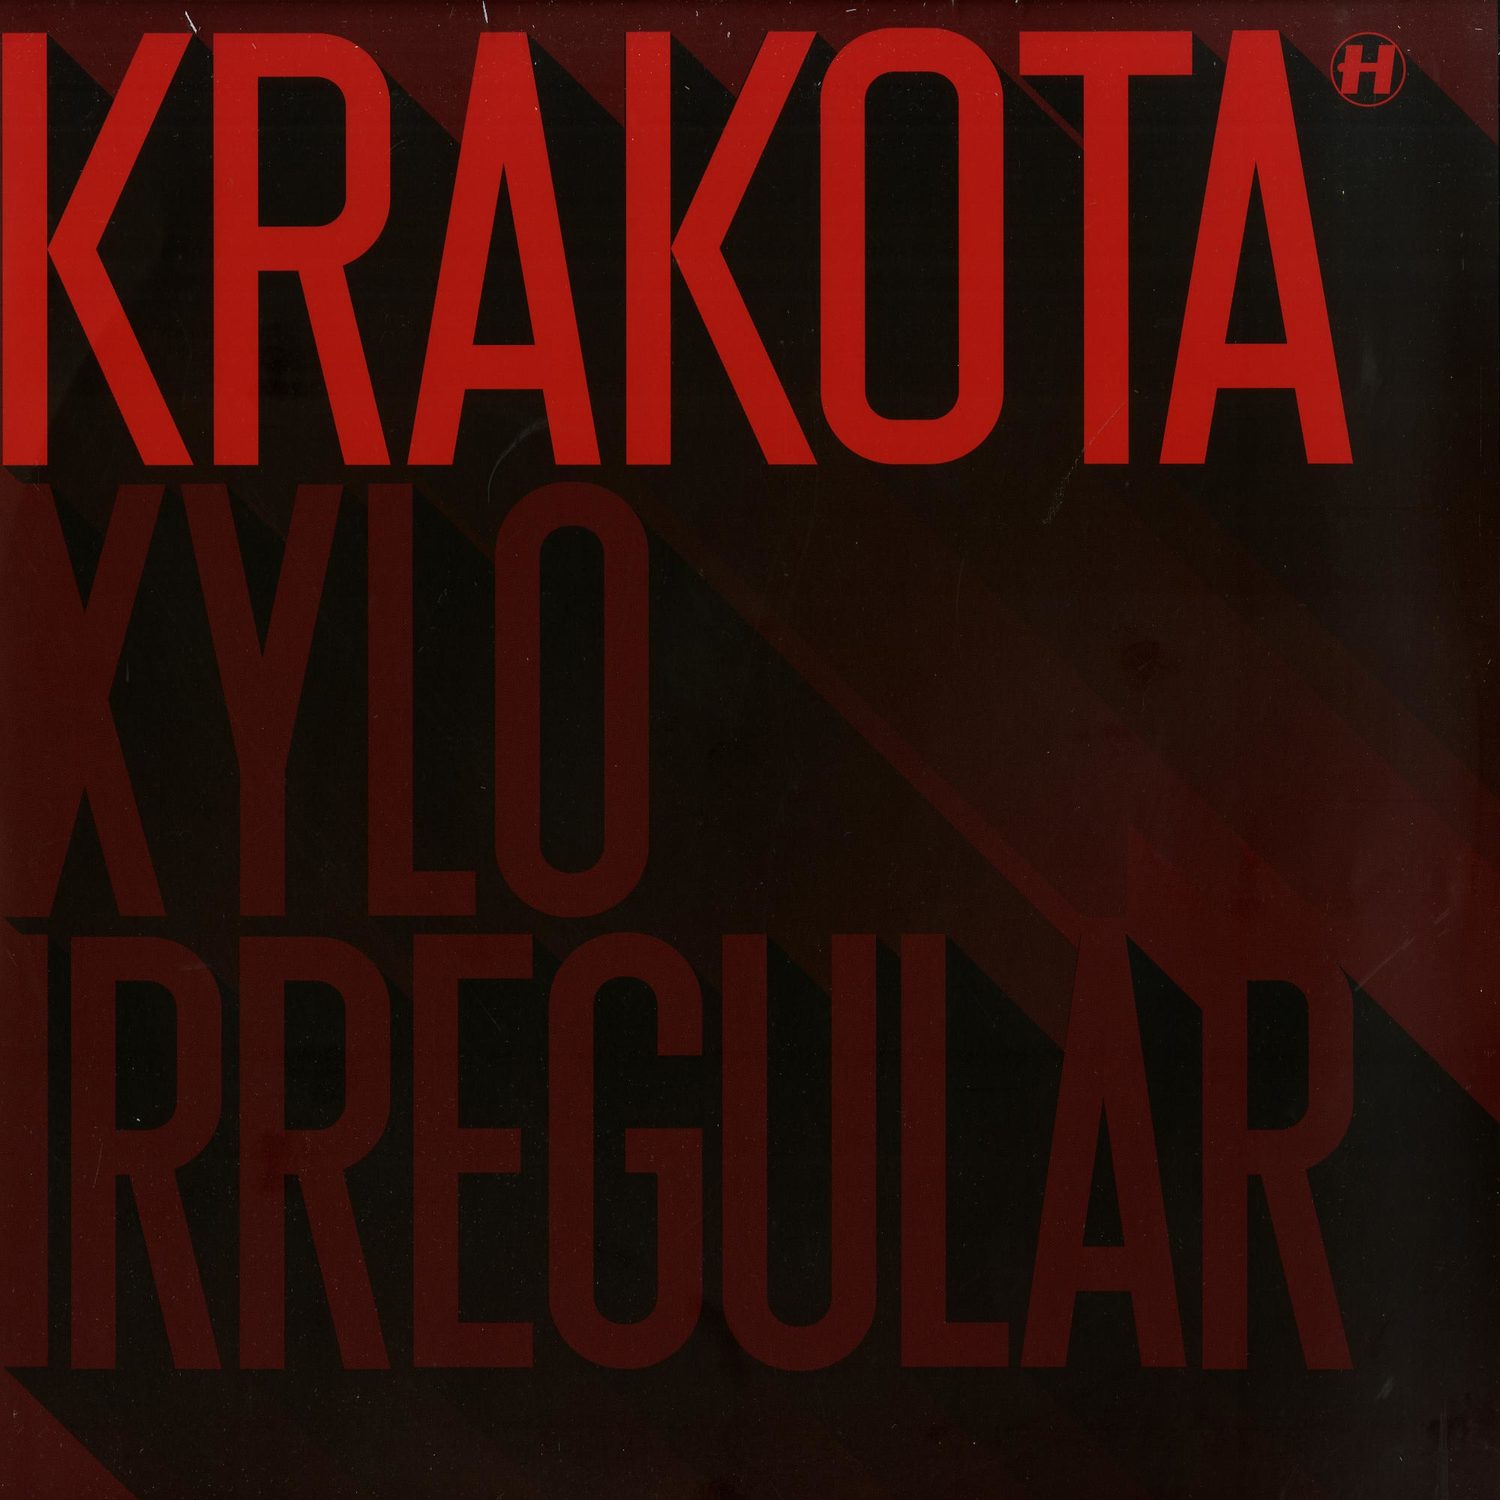 Krakota - XYLO / IRREGULAR